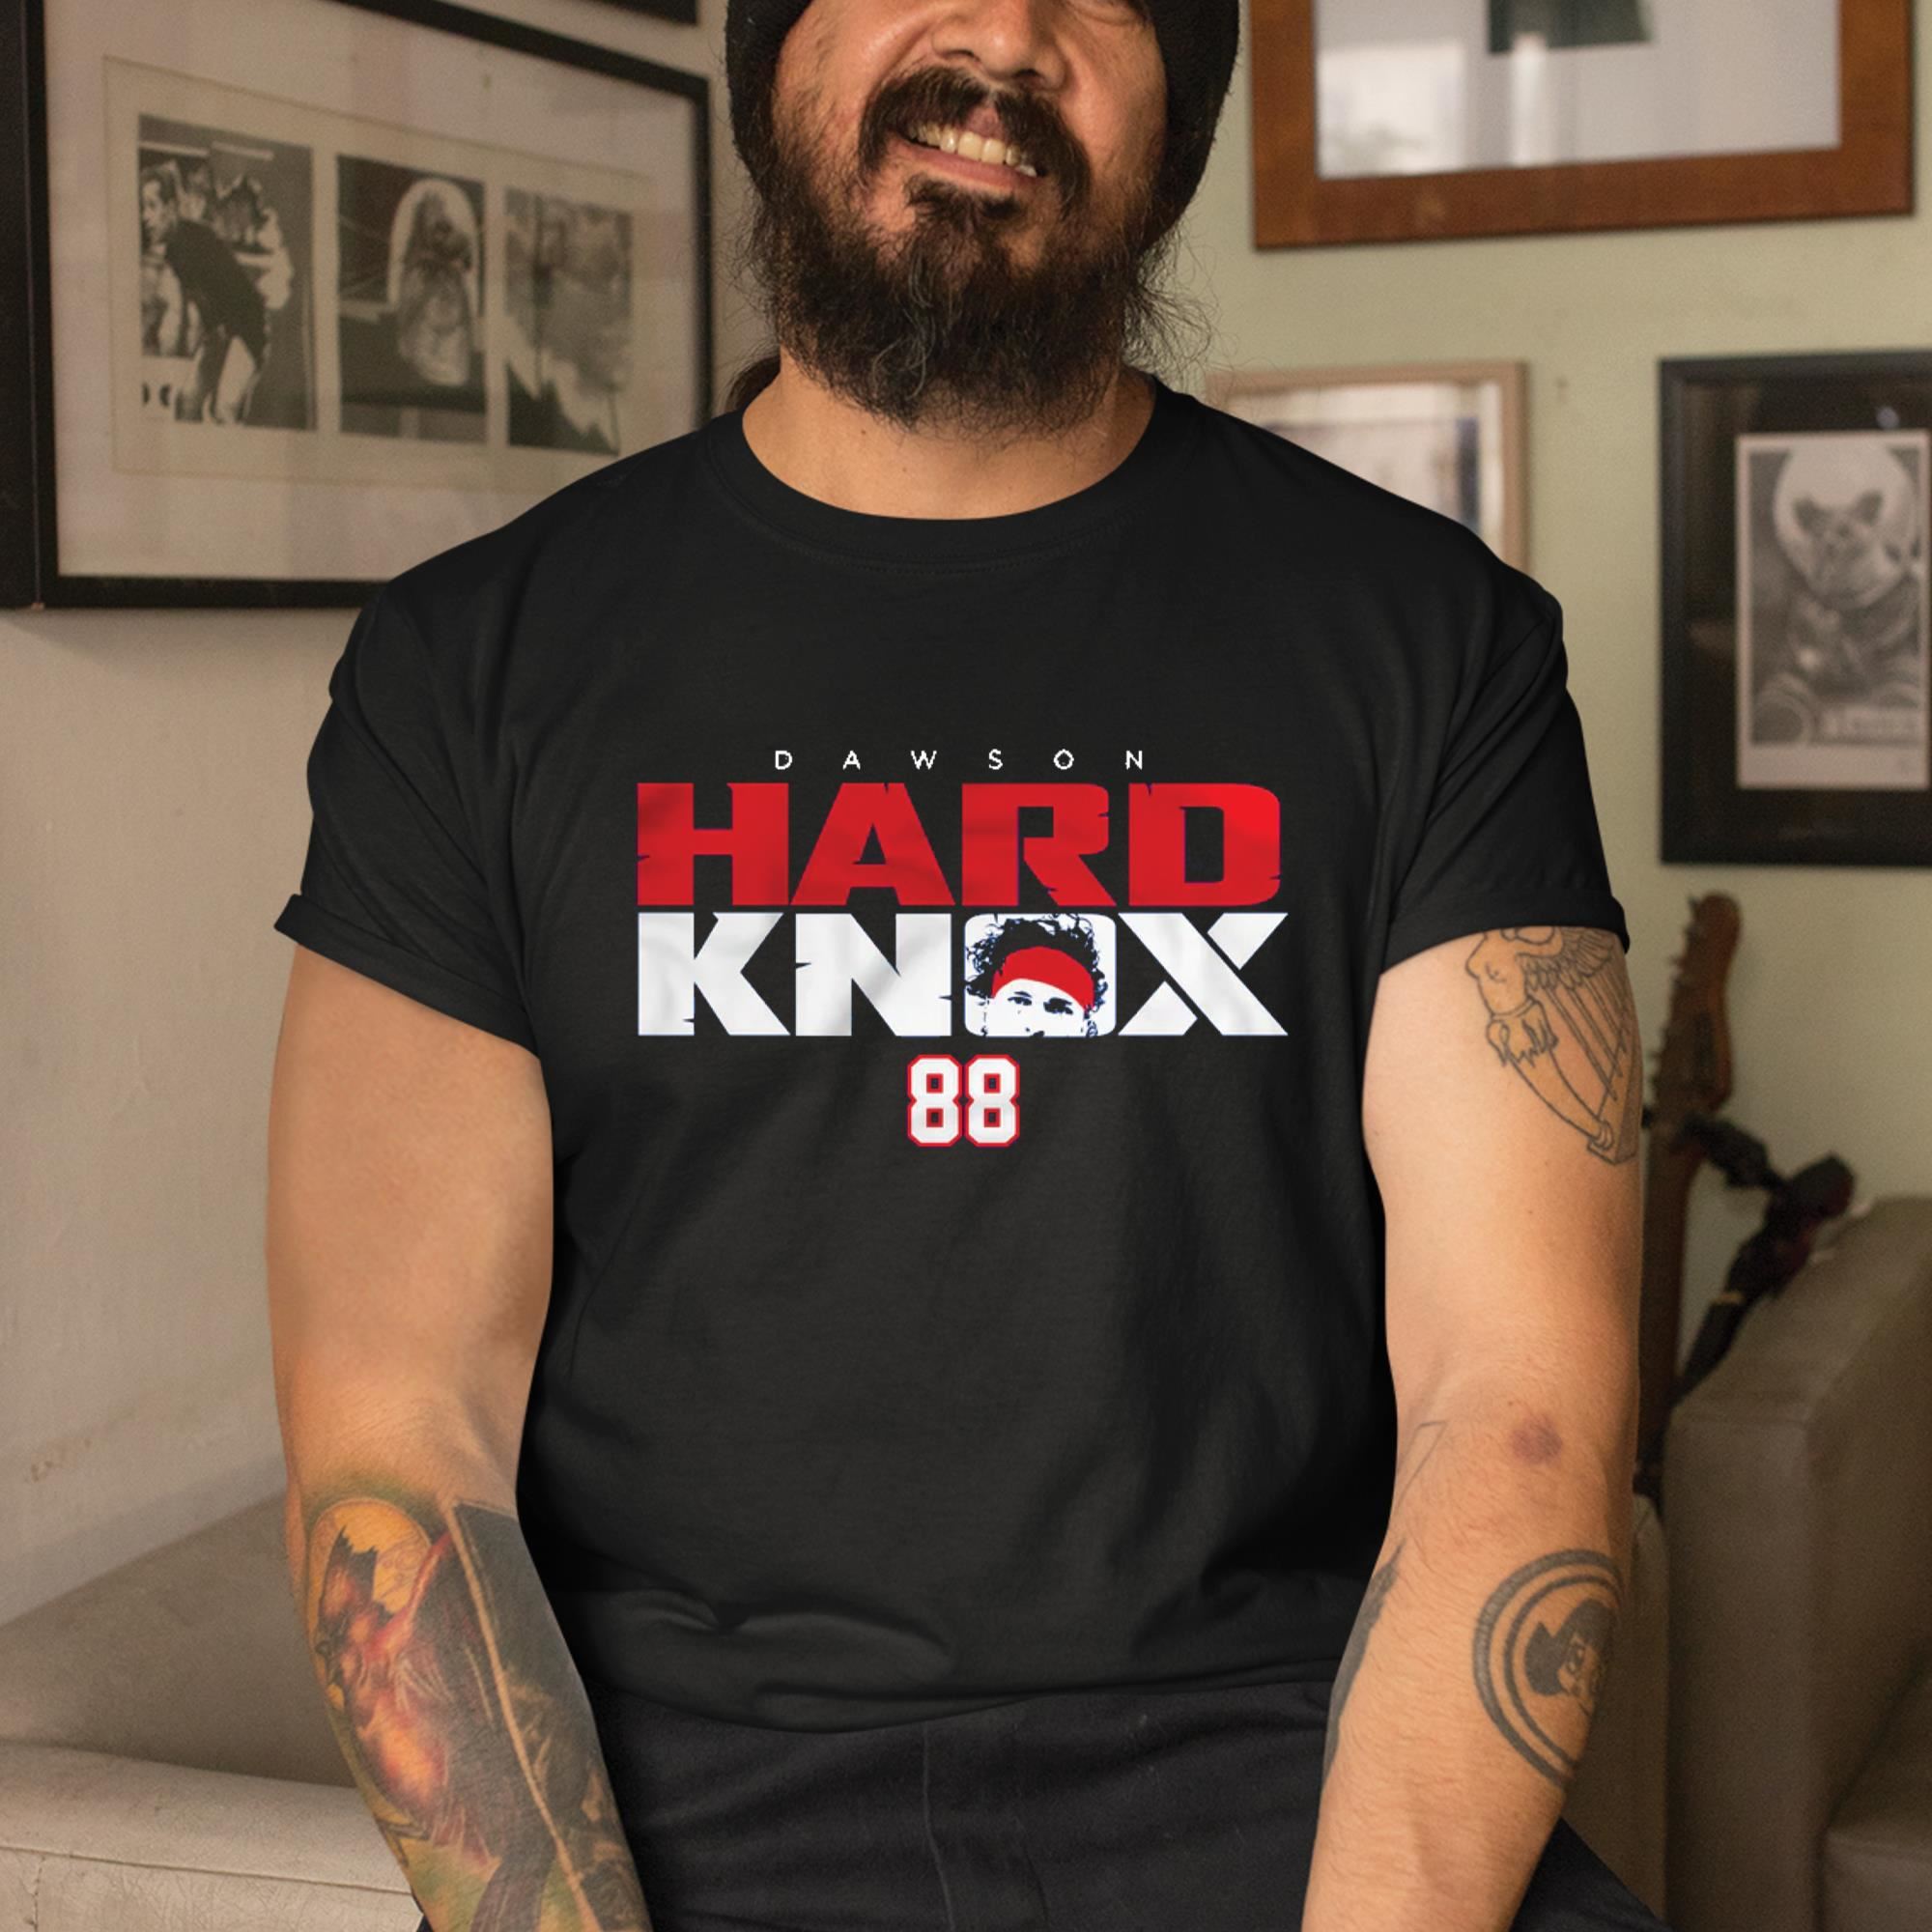 Hard Knox Tattoo Studio (@hardknoxtattoo) • Instagram photos and videos